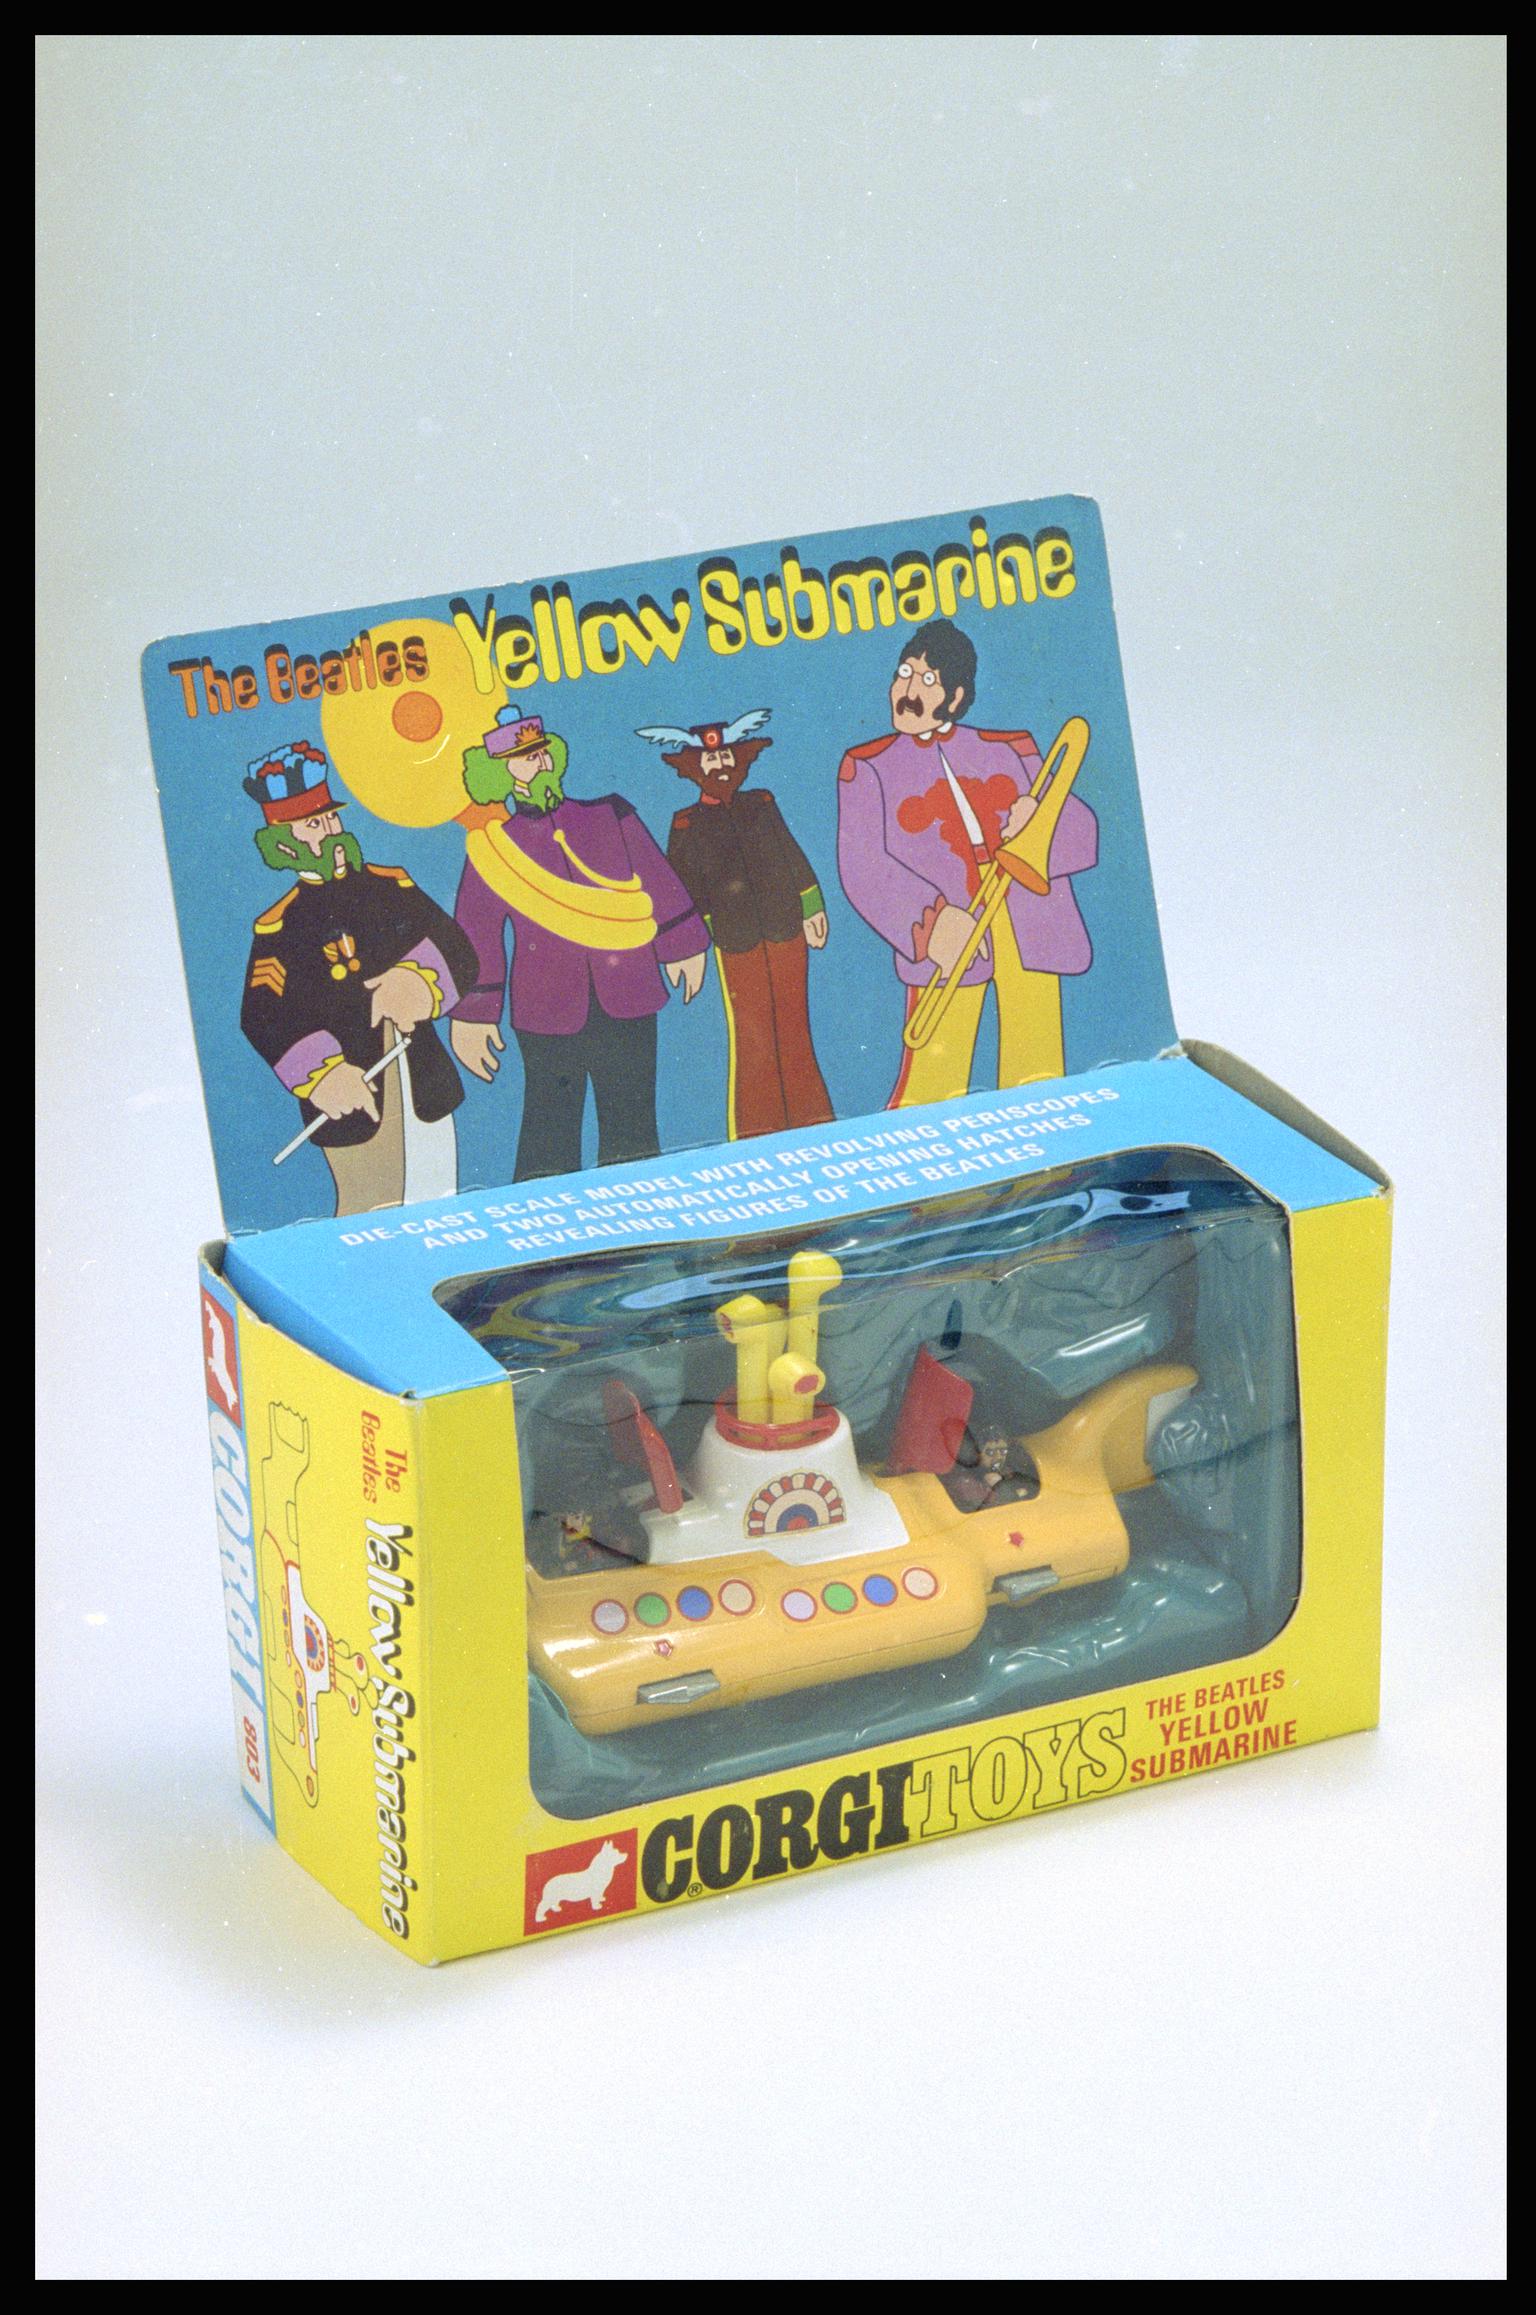 Corgi model of The Beatles "Yellow Submarine" in box